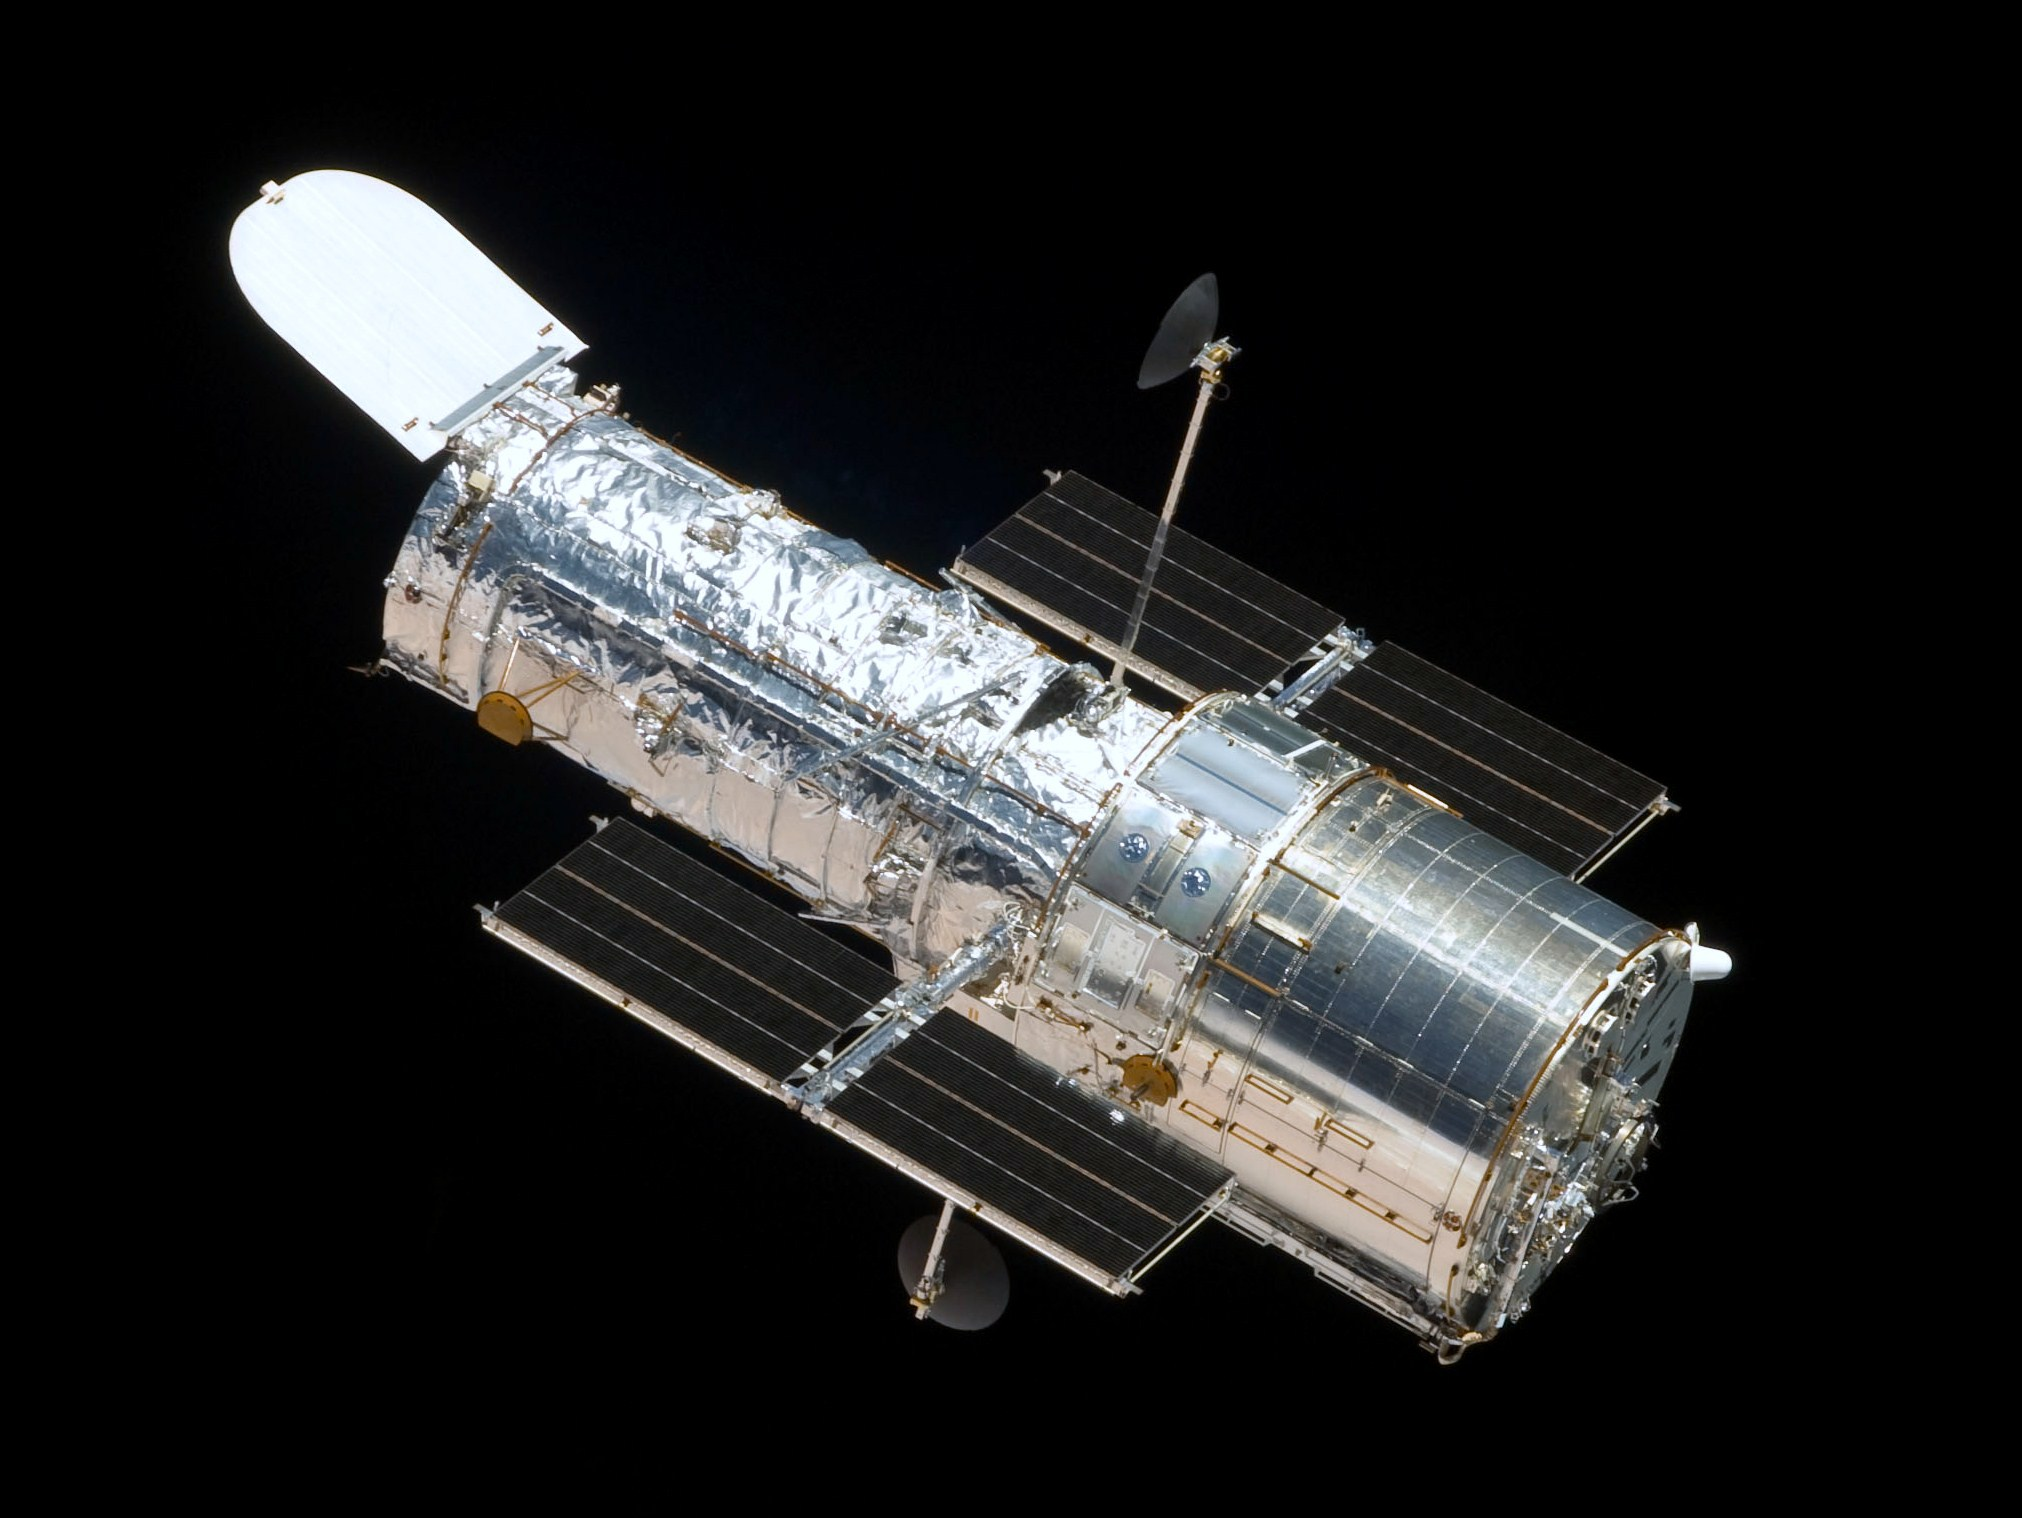 Hubble telescope on emaze.